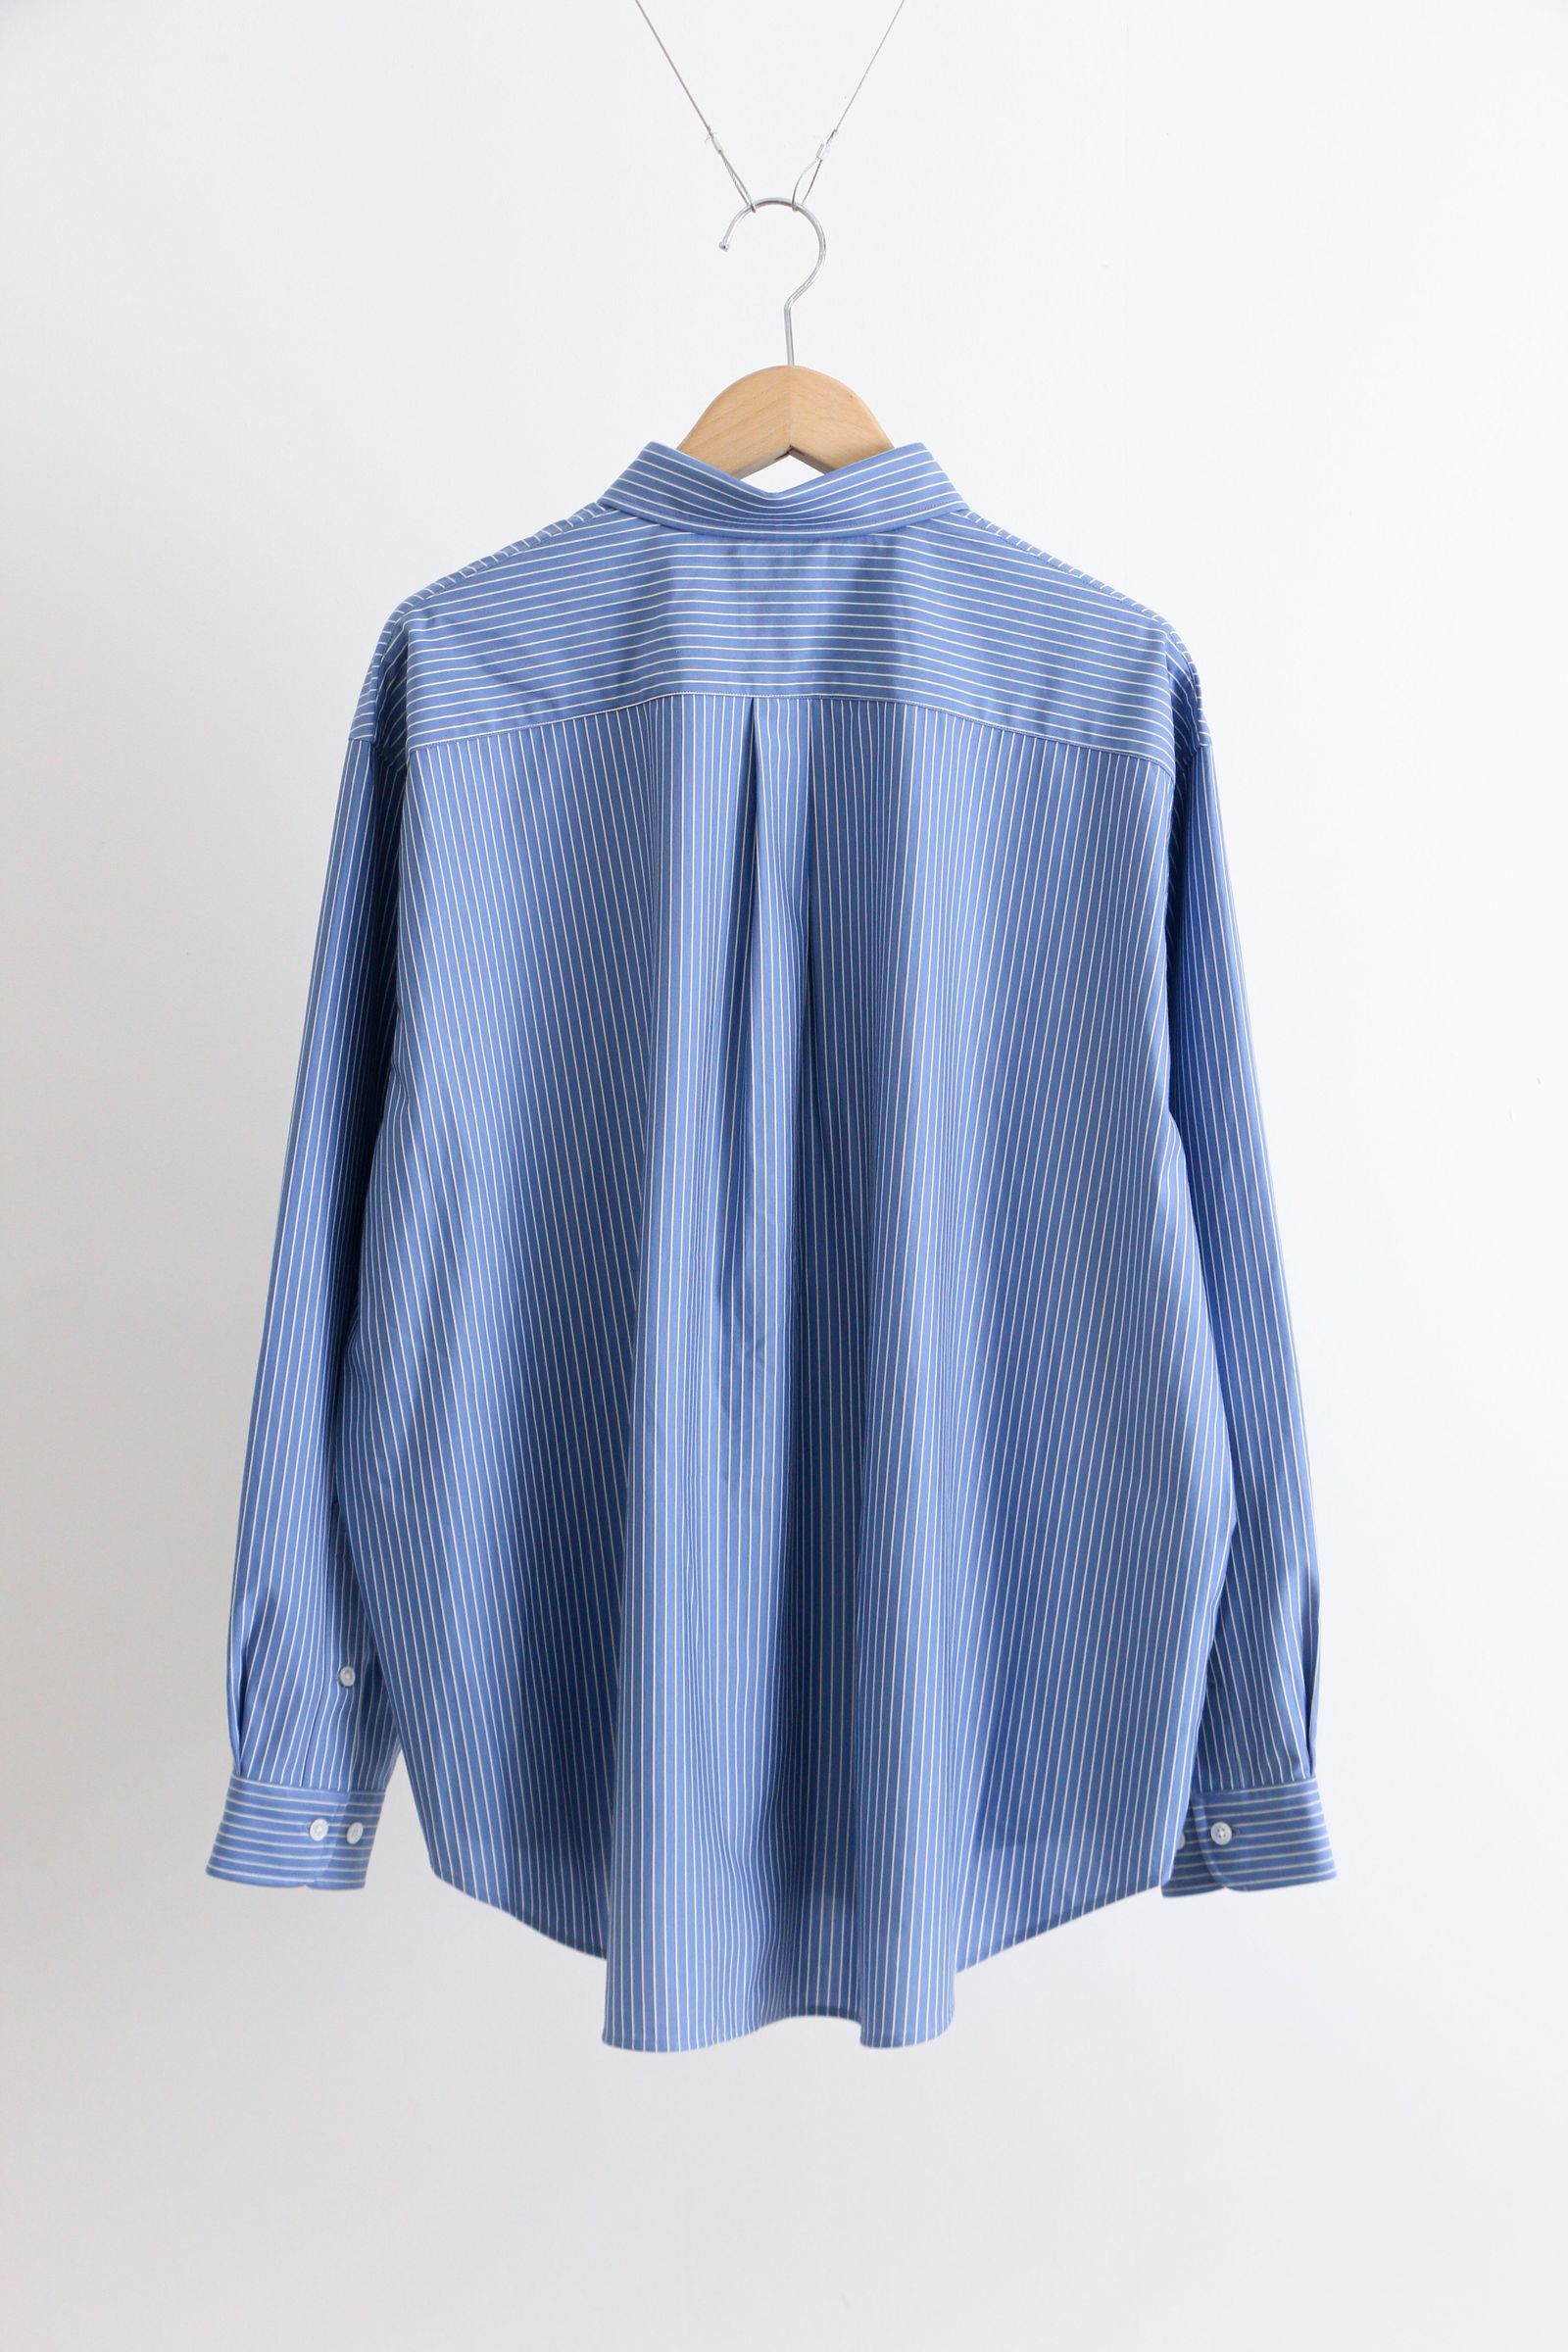 KANEMASA PHIL. - Pencil Stripe Dress Jersey Shirt / BL SP